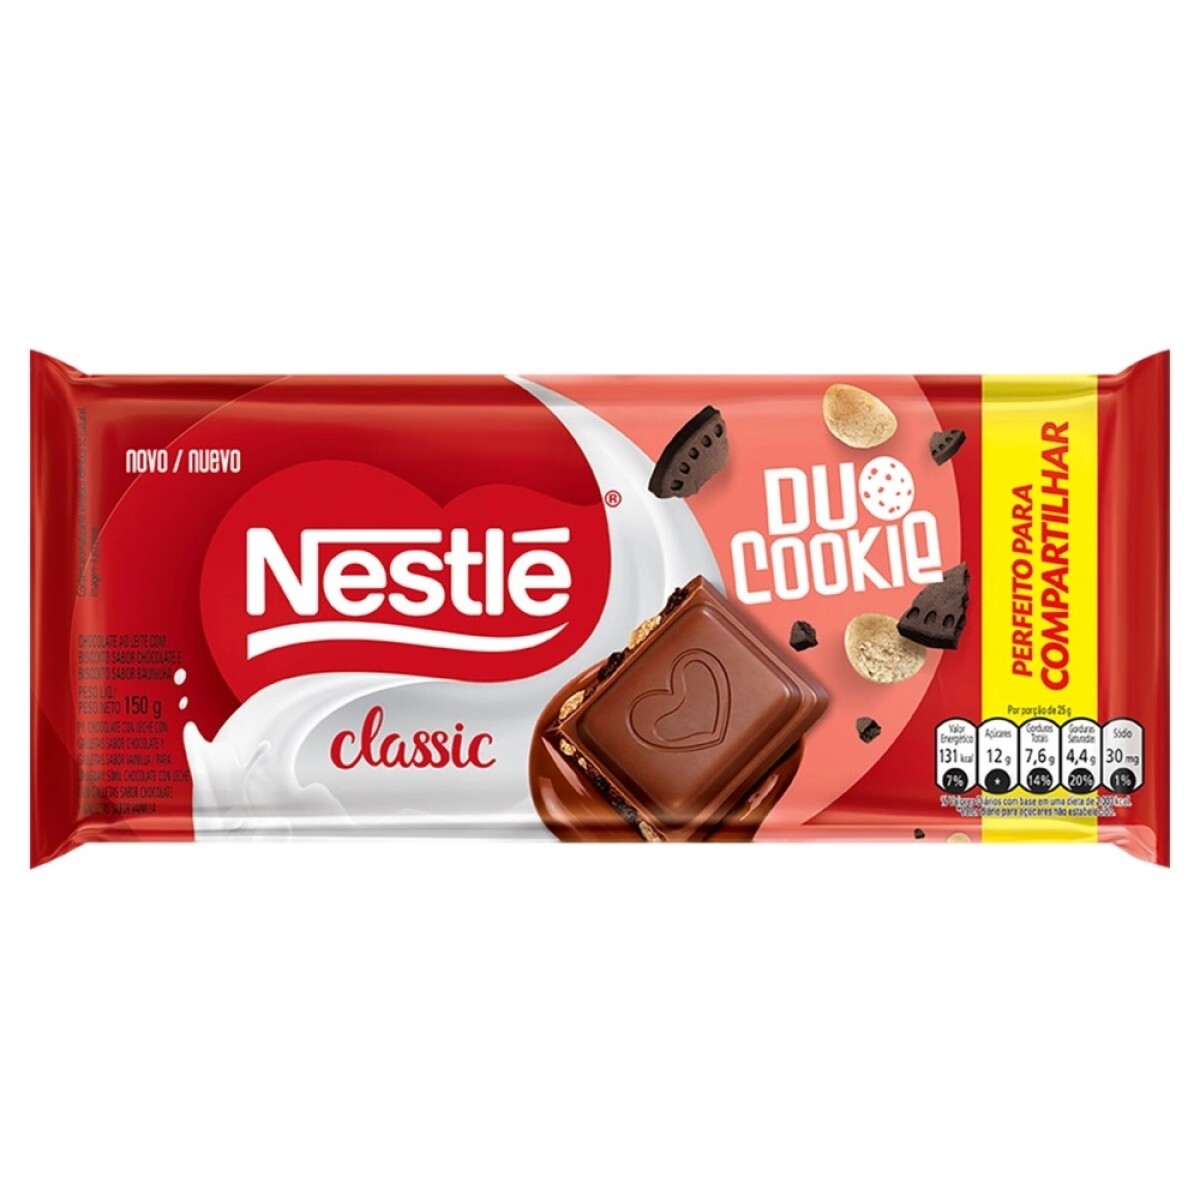 Tableta De Chocolate Nestle Classic Duo Cookie 150 Grs. 